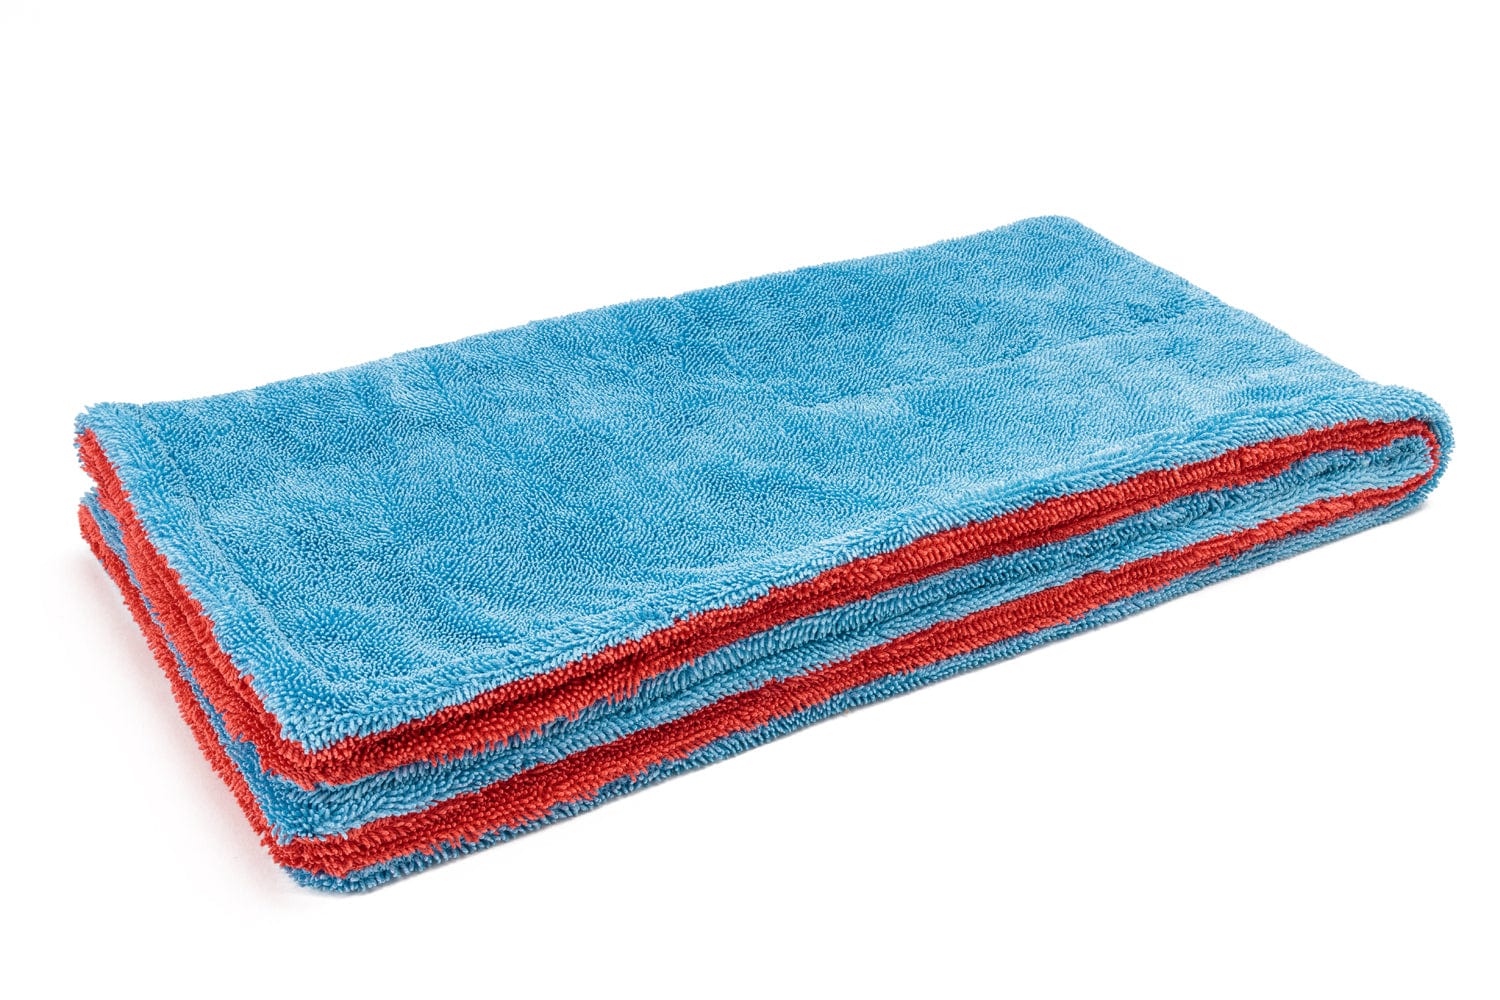 Autofiber Bulk Towel Blue/Red FULL CASE Dreadnought MAX XL - Triple Layer Microfiber Twist Pile Drying Towel (20 in. x 40 in., 1400gsm) - 18/case